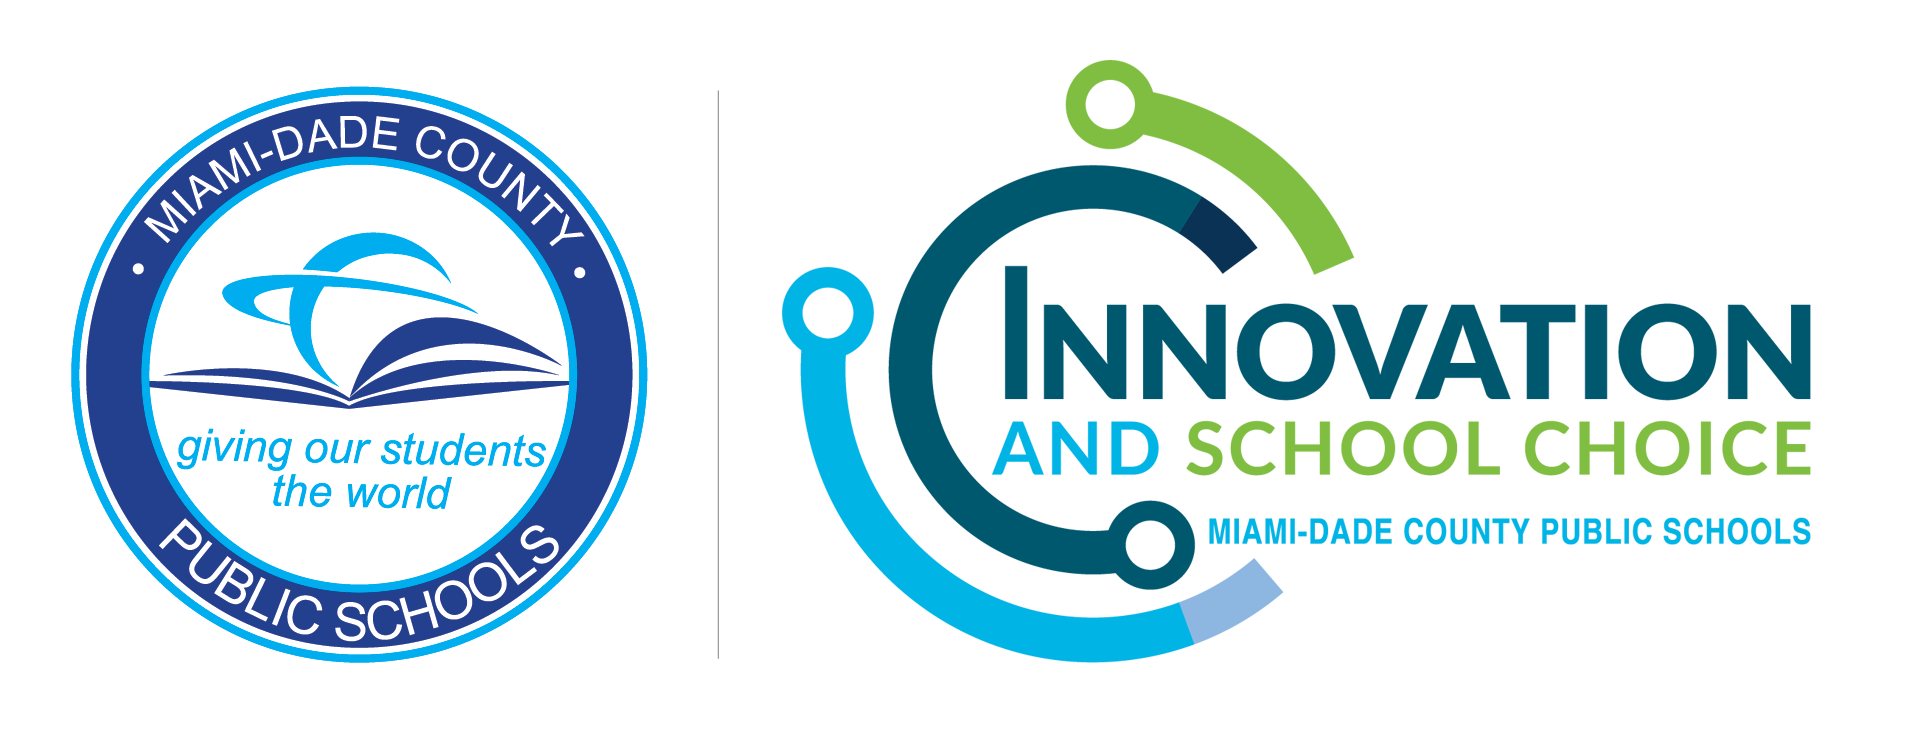 Innovation and School Choice